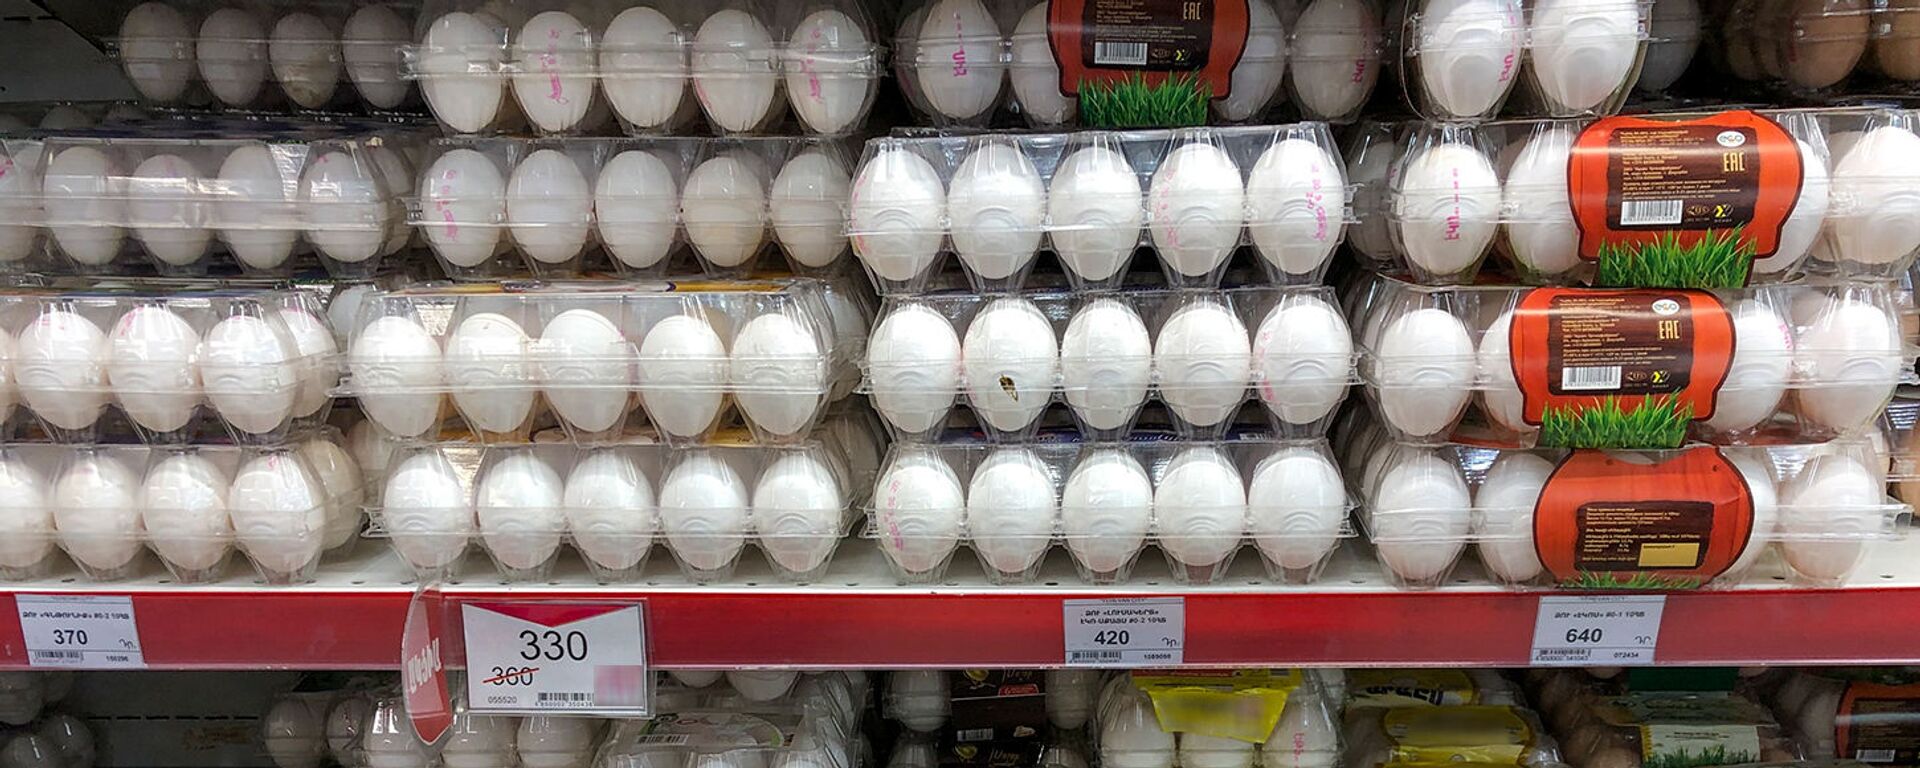 Яйца на прилавках супермаркета - Sputnik Արմենիա, 1920, 29.03.2021